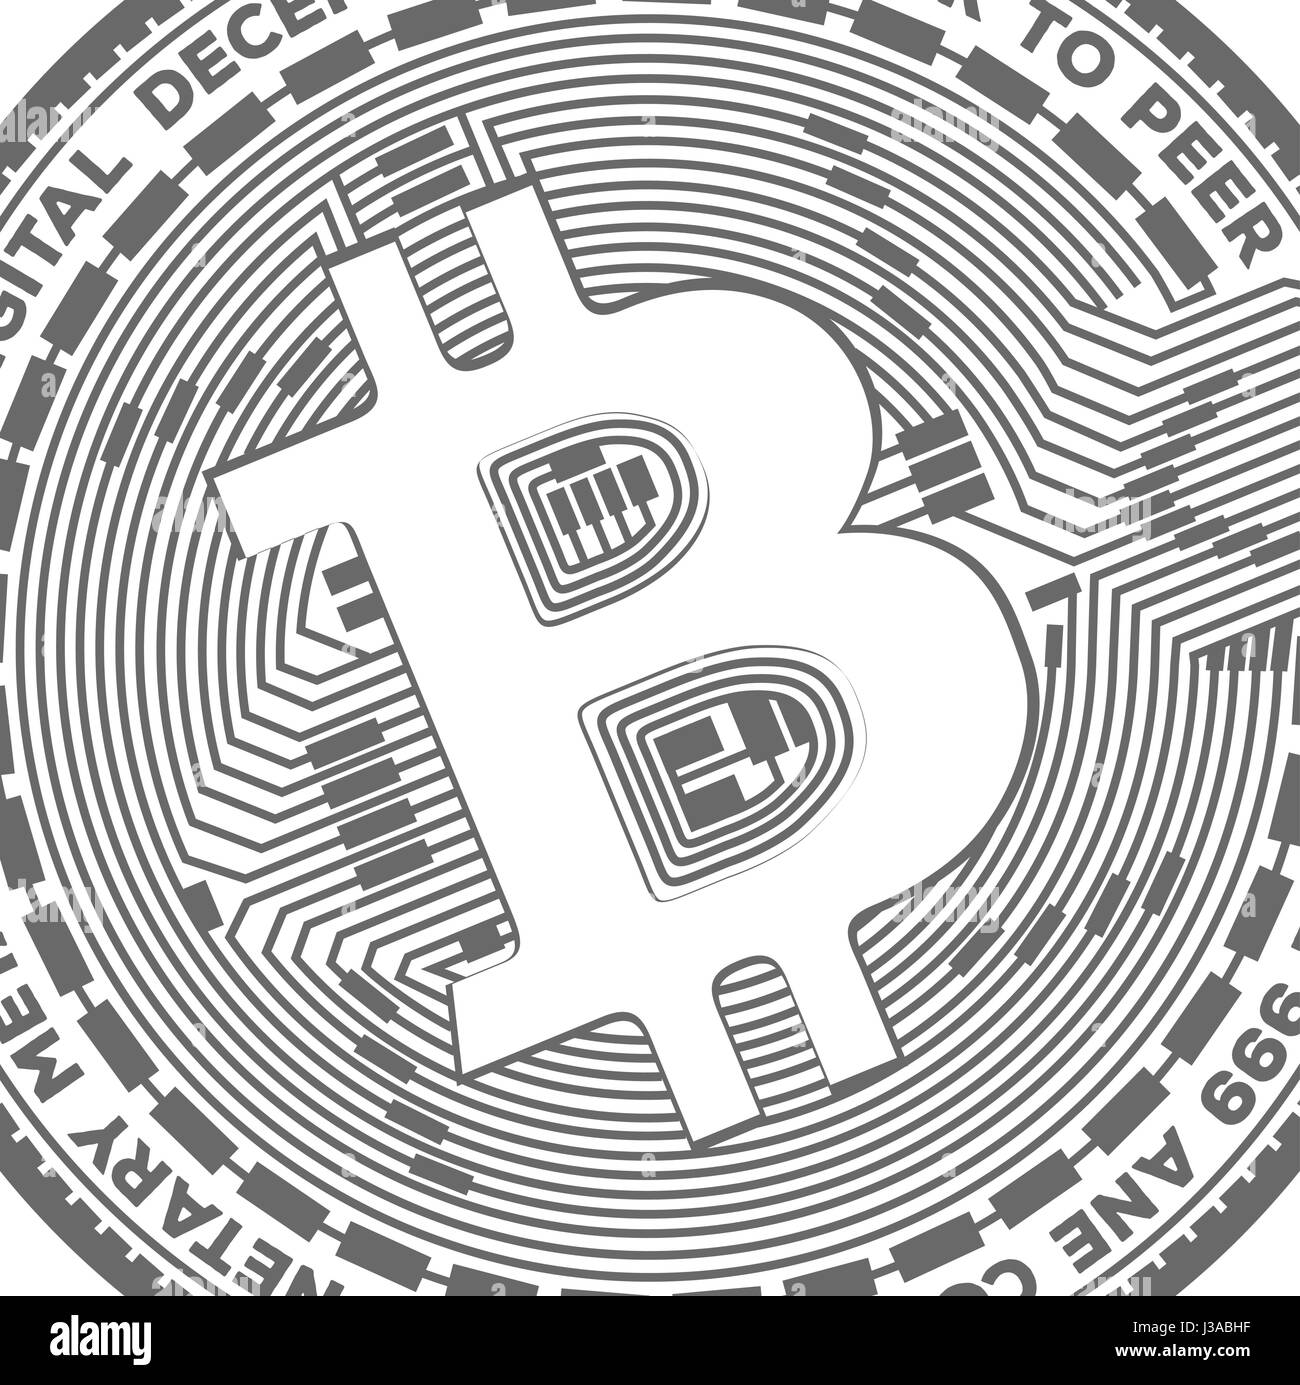 Bitcoin crypto coin symbol illustration Stock Vector Image ...